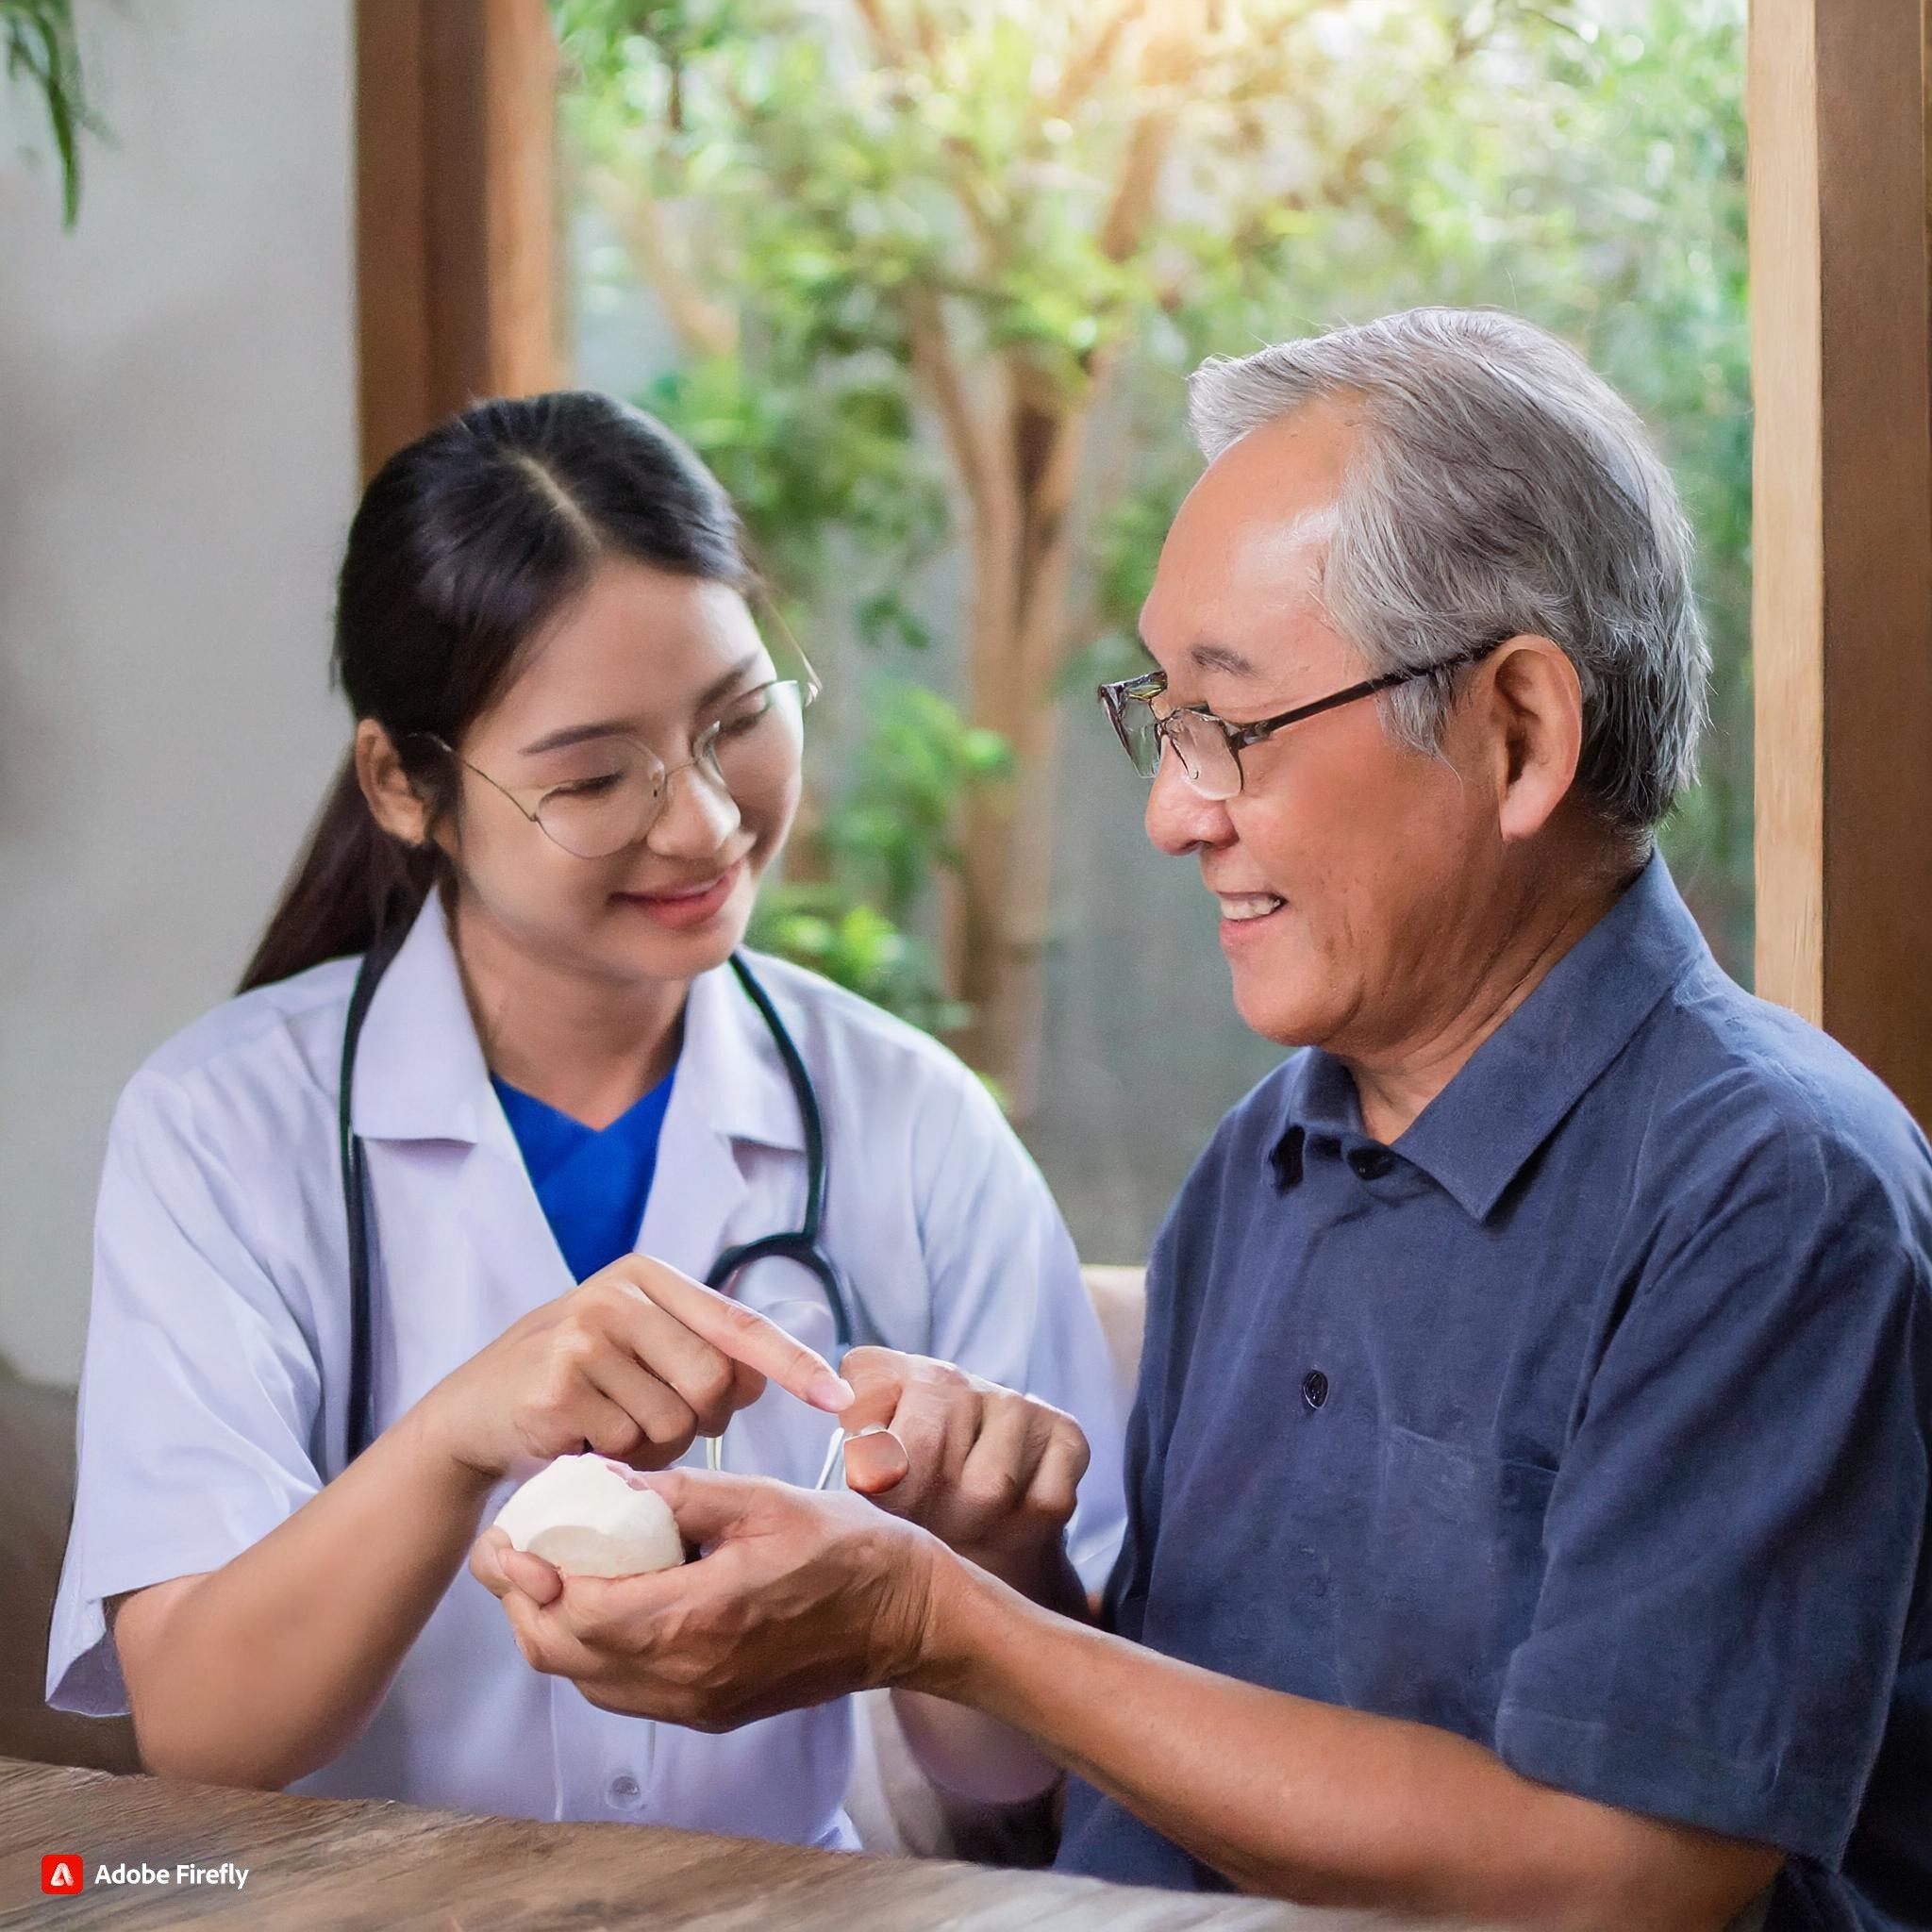 Firefly 台灣人專業聽力師在家中為老人提供助聽器選配服務的場景，展現專業、貼心和便利的形象。 34565